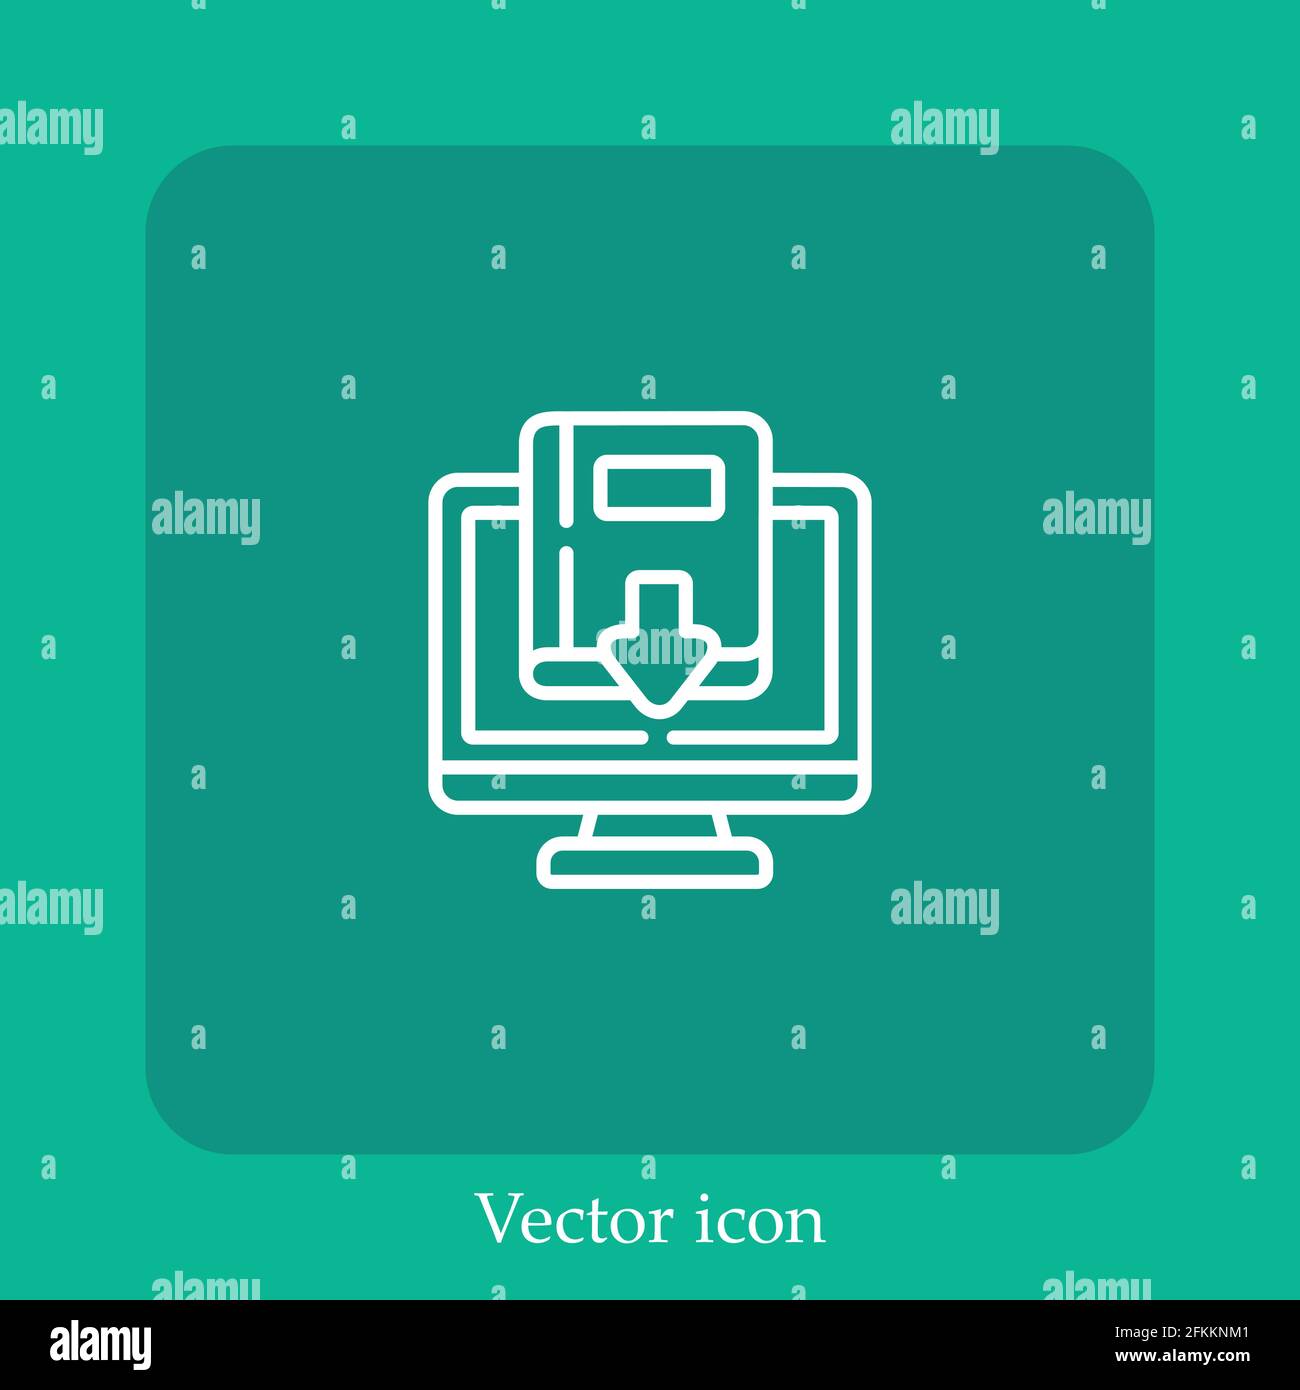 download vector icon linear icon.Line with Editable stroke Stock Vector